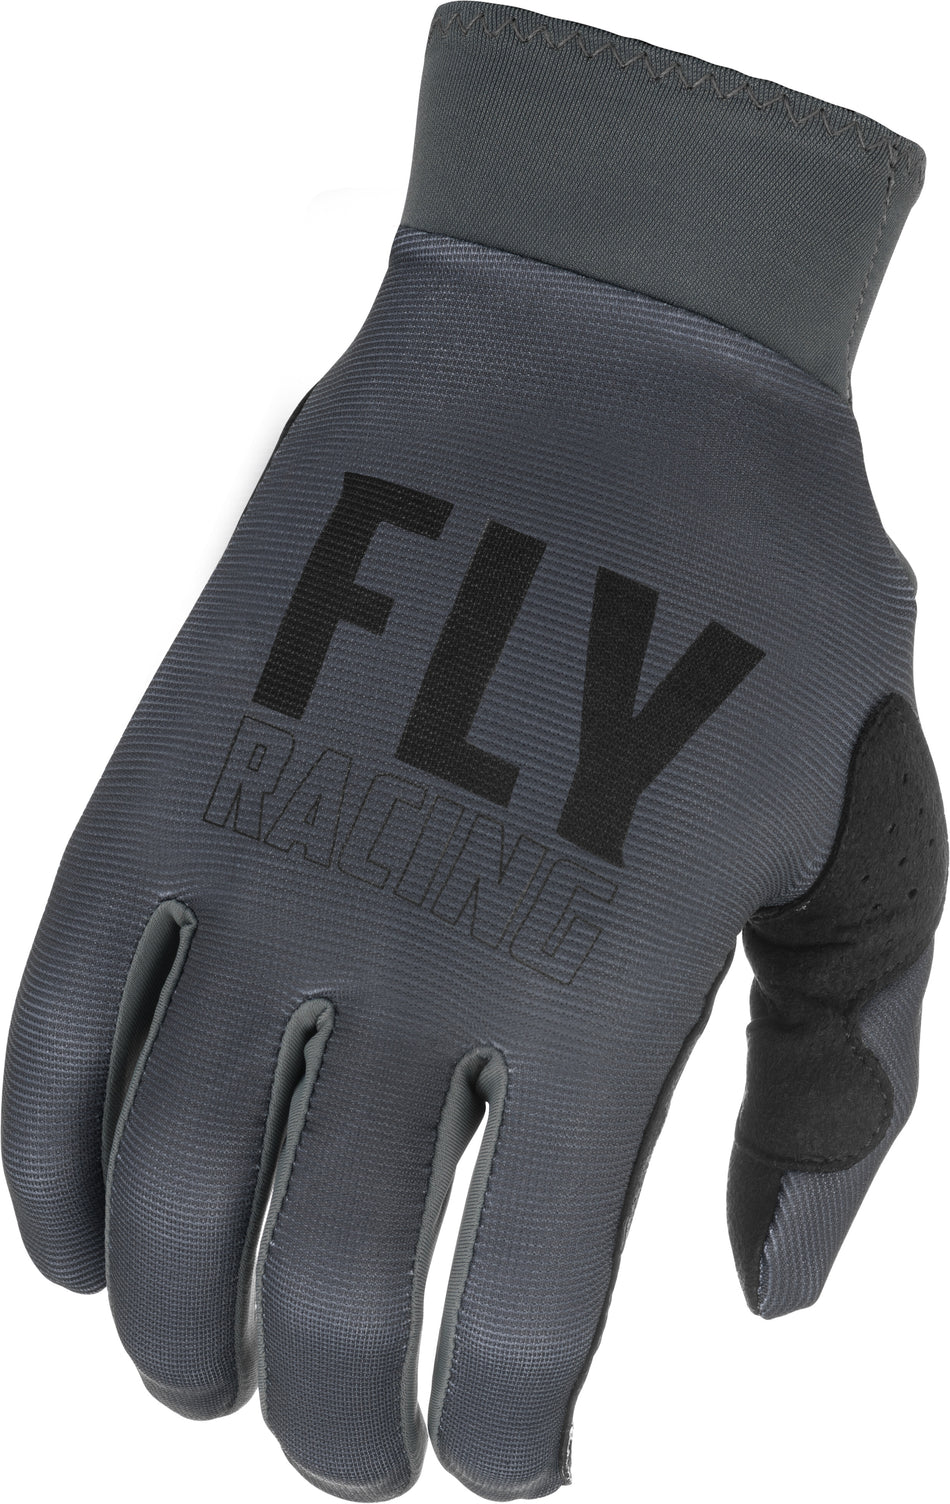 FLY RACING Pro Lite Gloves Grey/Black Sz 08 374-85608